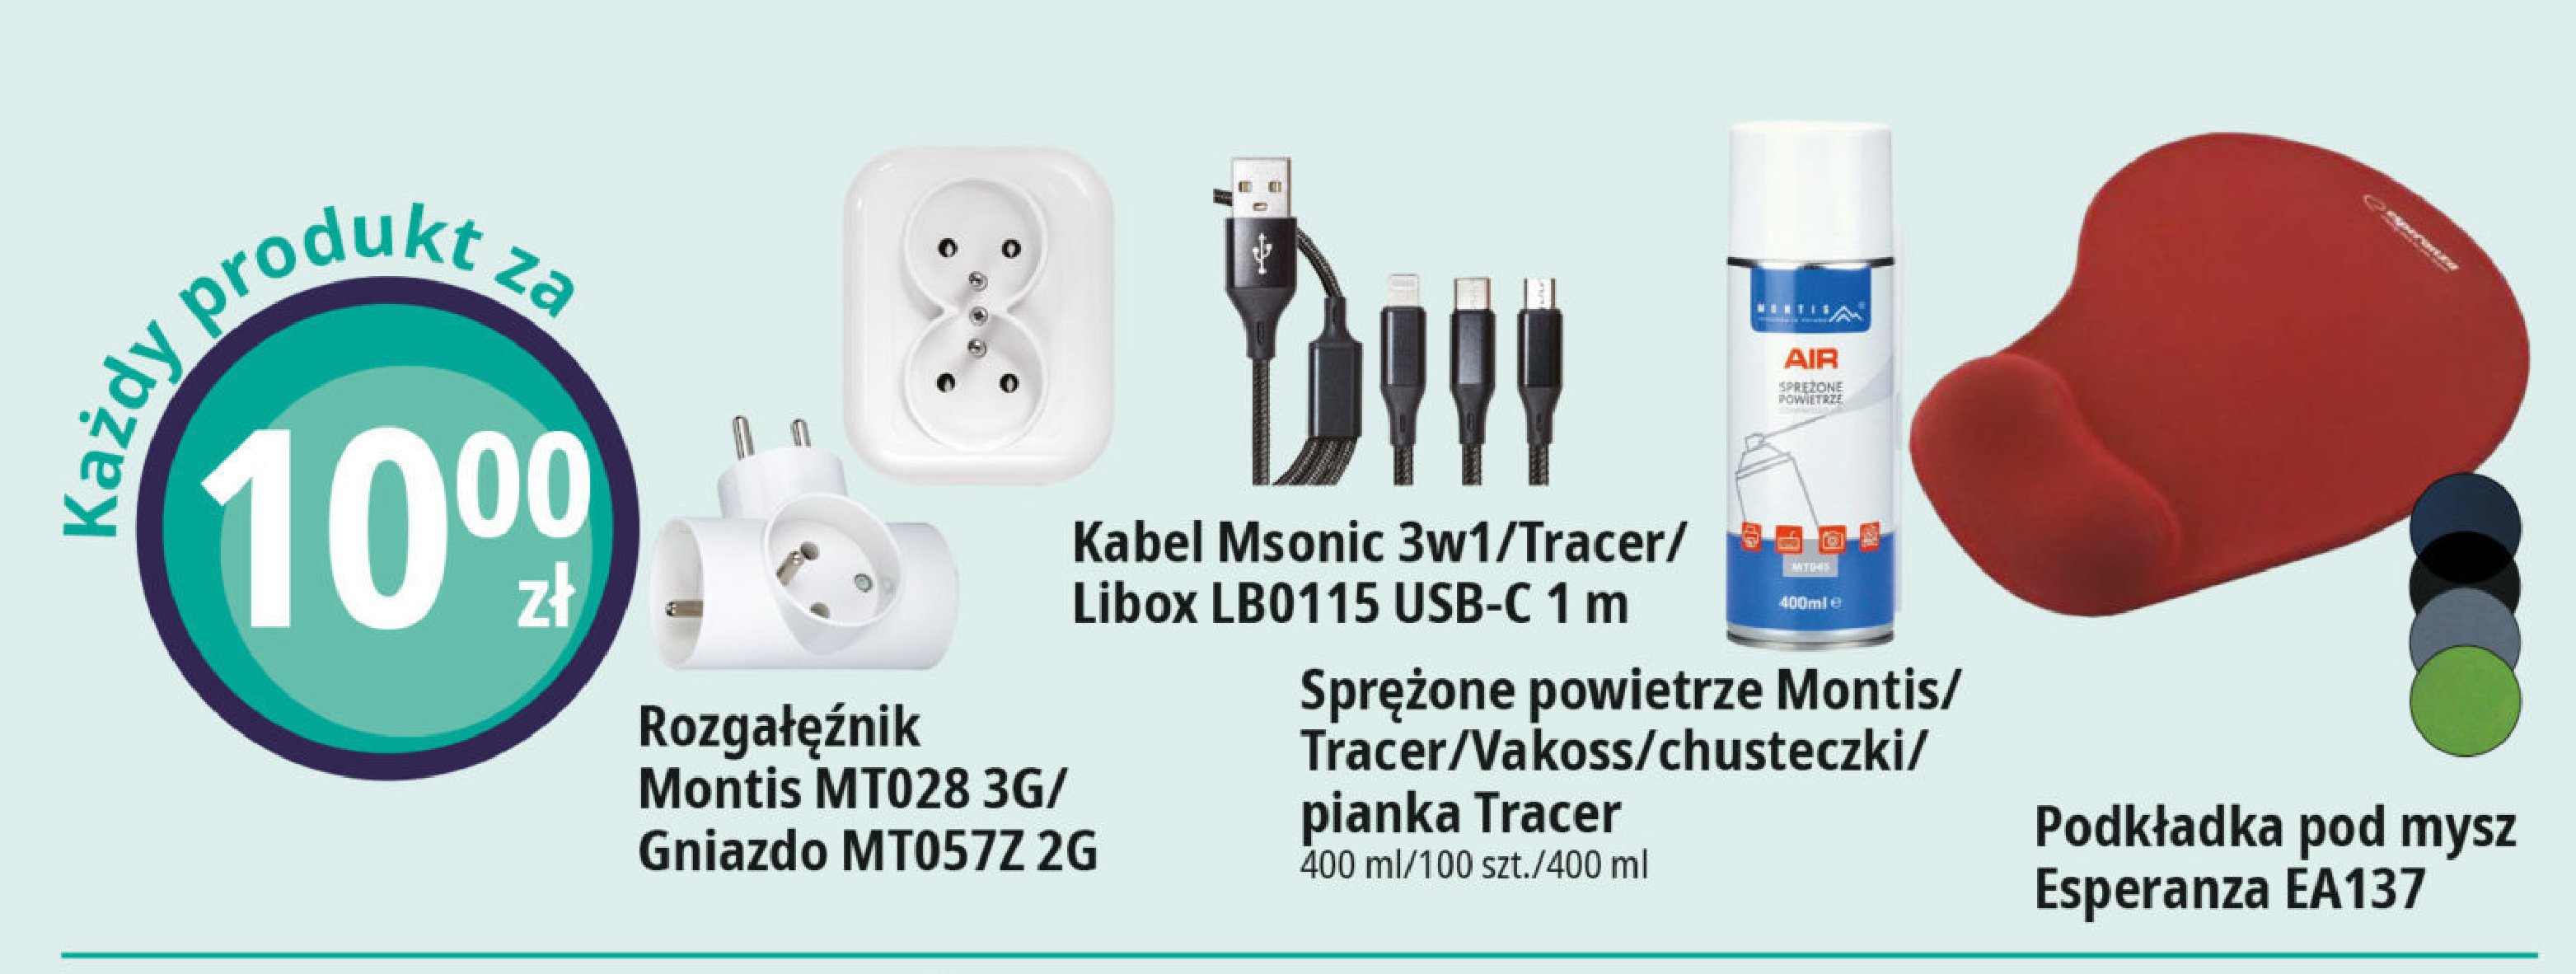 Kabel lb0115 usb-c 1 m Libox promocja